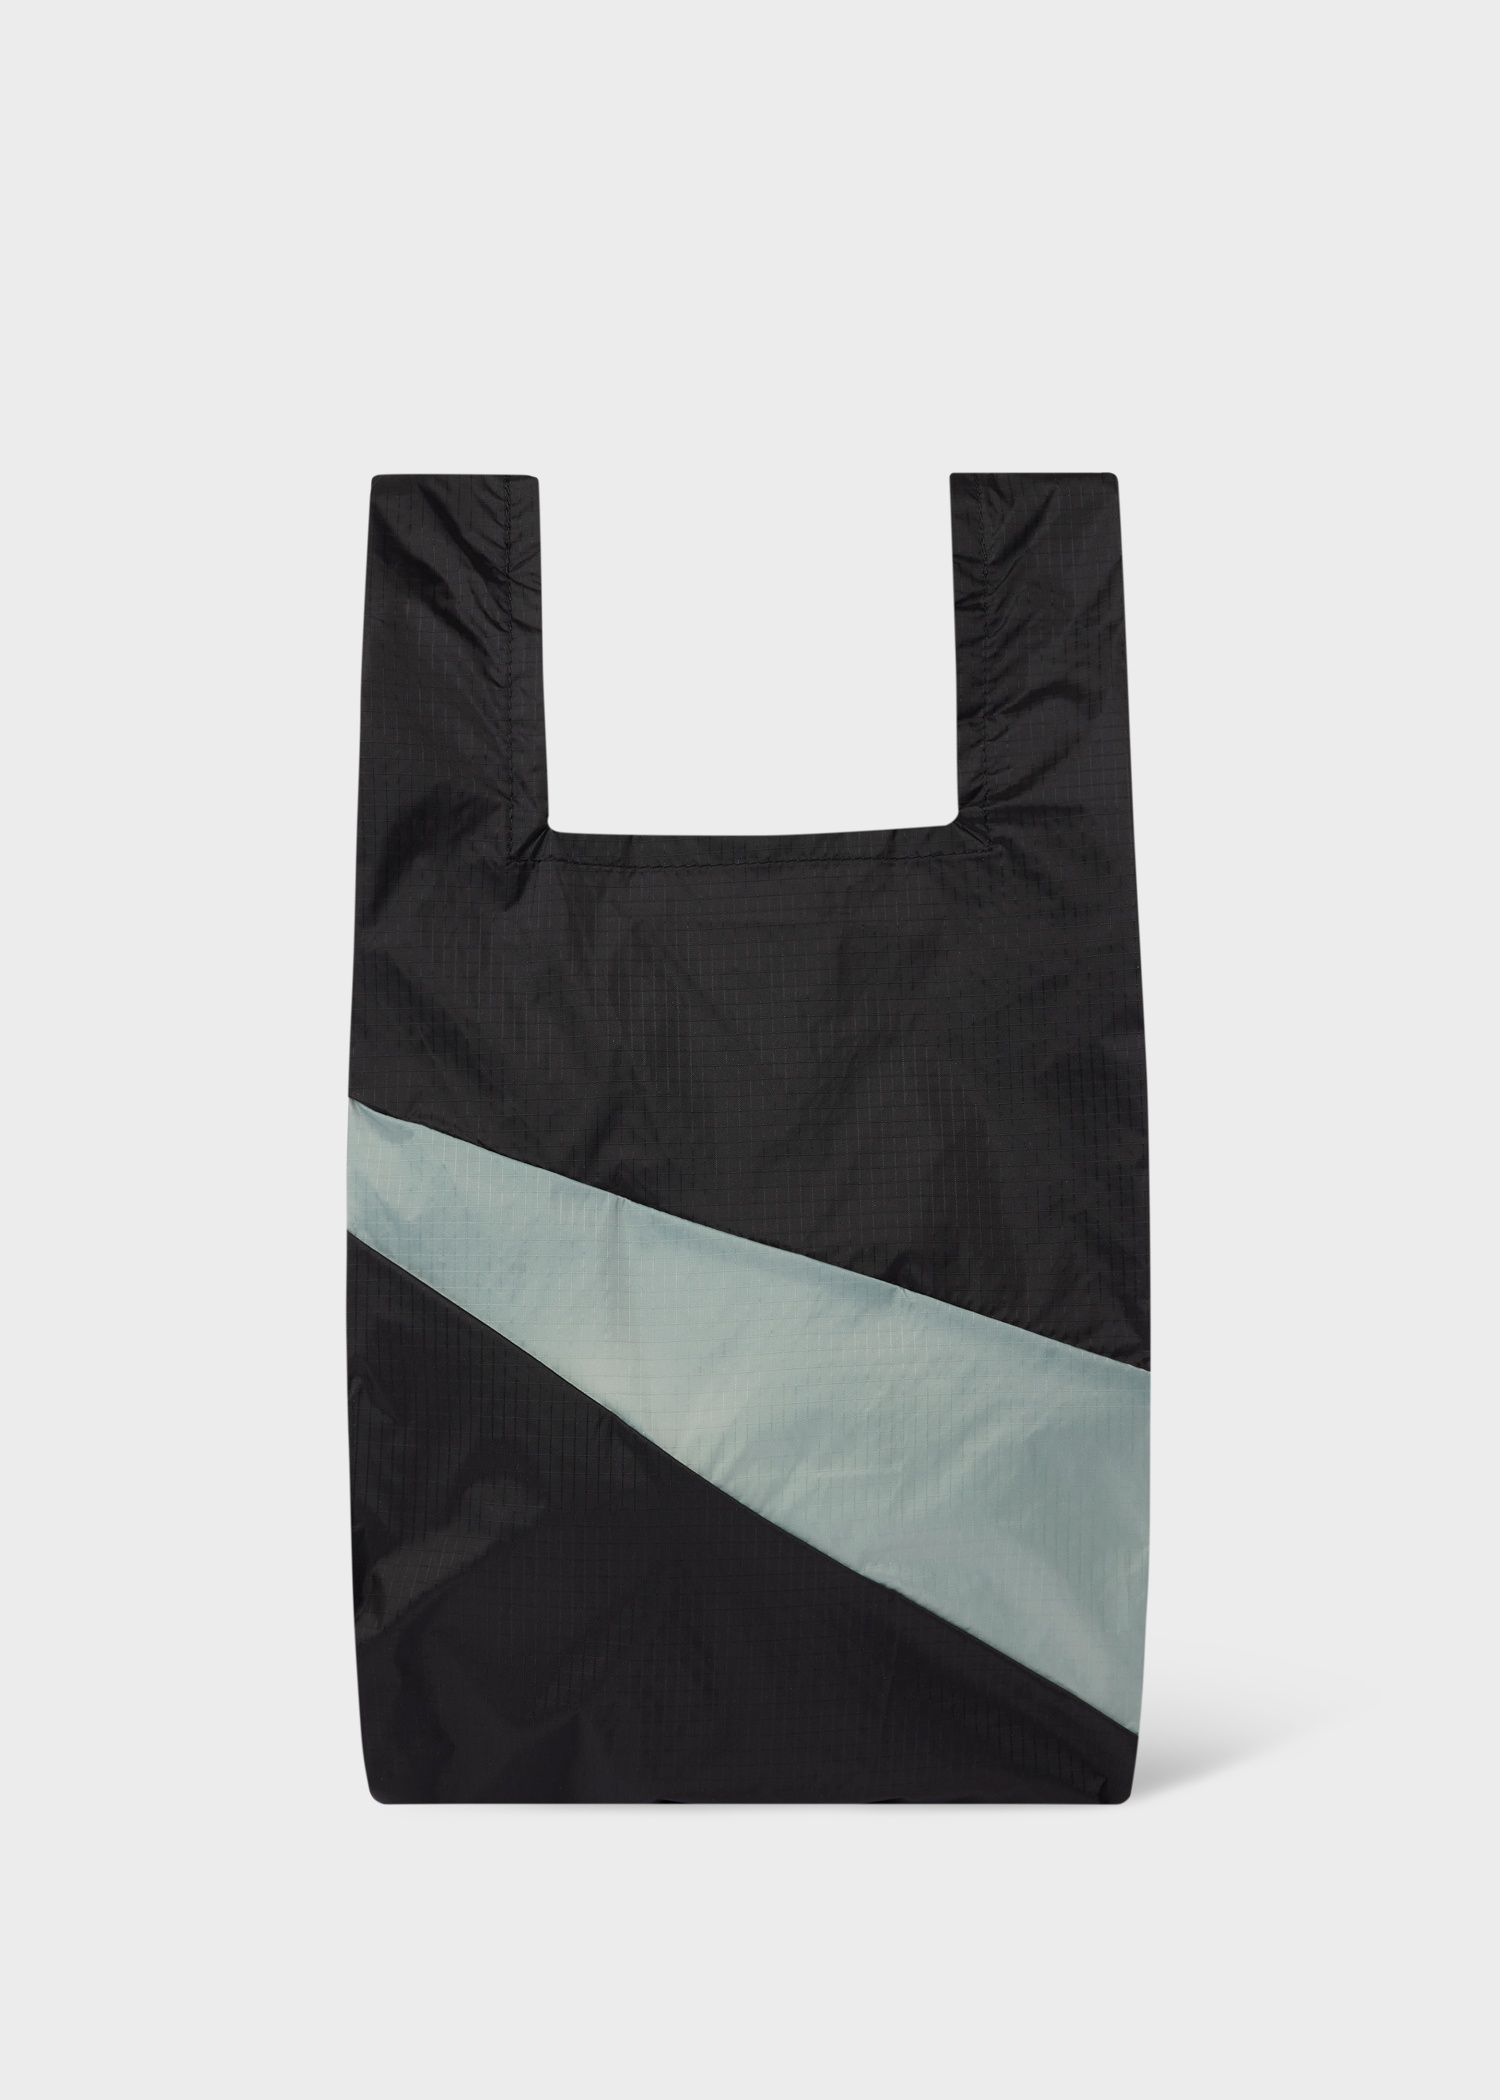 Black & Grey 'The New Shopping Bag' by Susan Bijl - Medium - 4